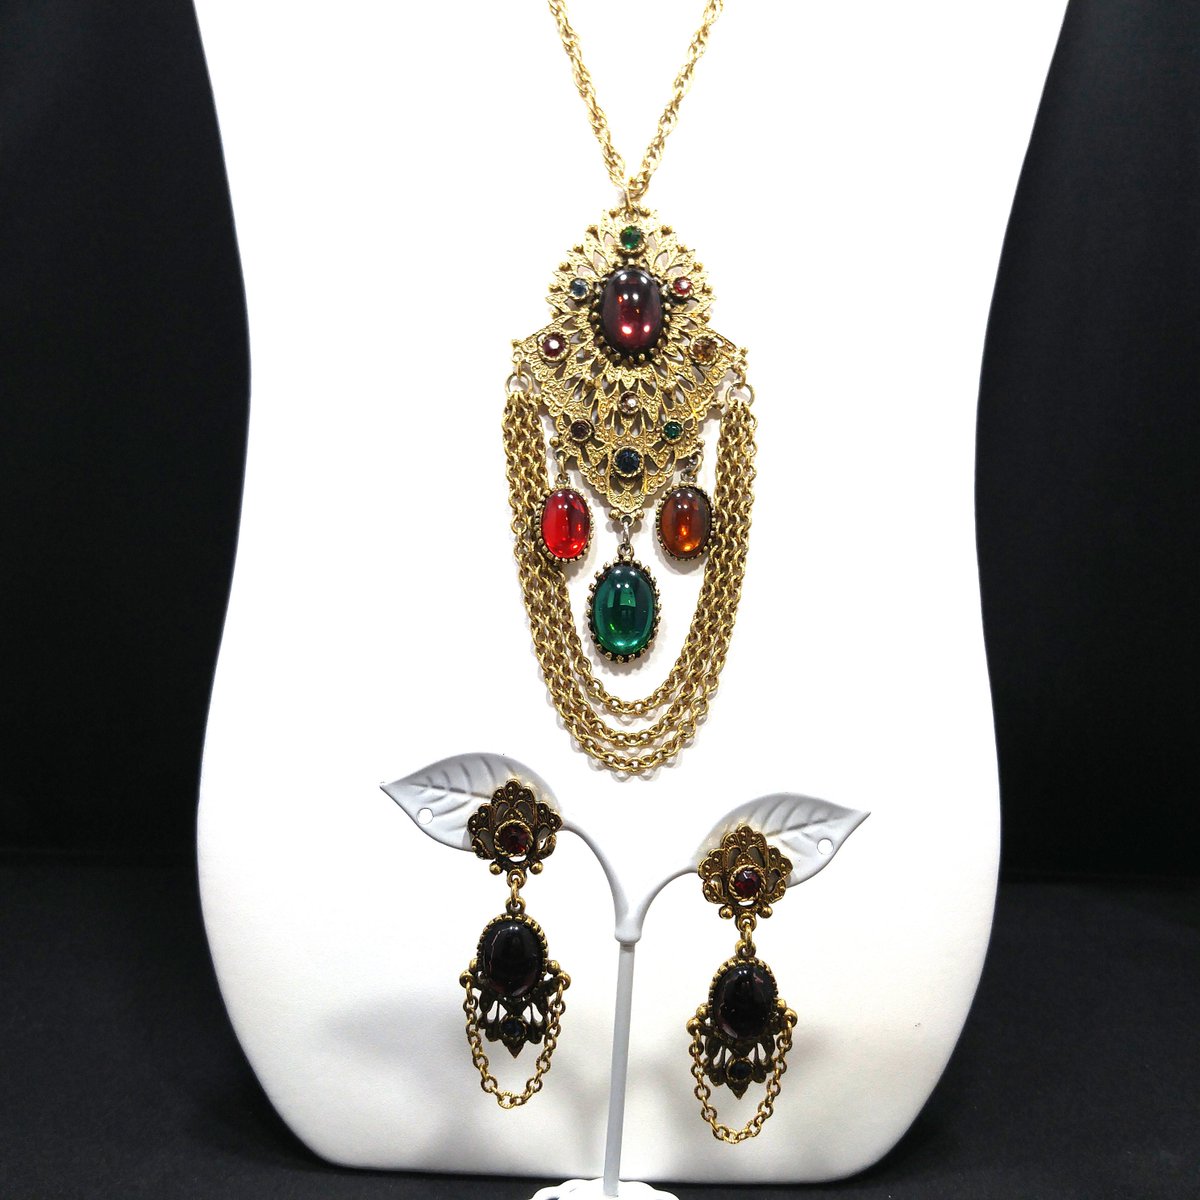 #etsy shop: Multicolor Cabochon Long Necklace Earrings Set, 1960s Vintage Jewelry etsy.me/41PGFFr #purple #gold #glass #multicoloredcabs #rhinestonependant #necklaceearrings #vintagenecklace #vintageearrings #cliponearrings